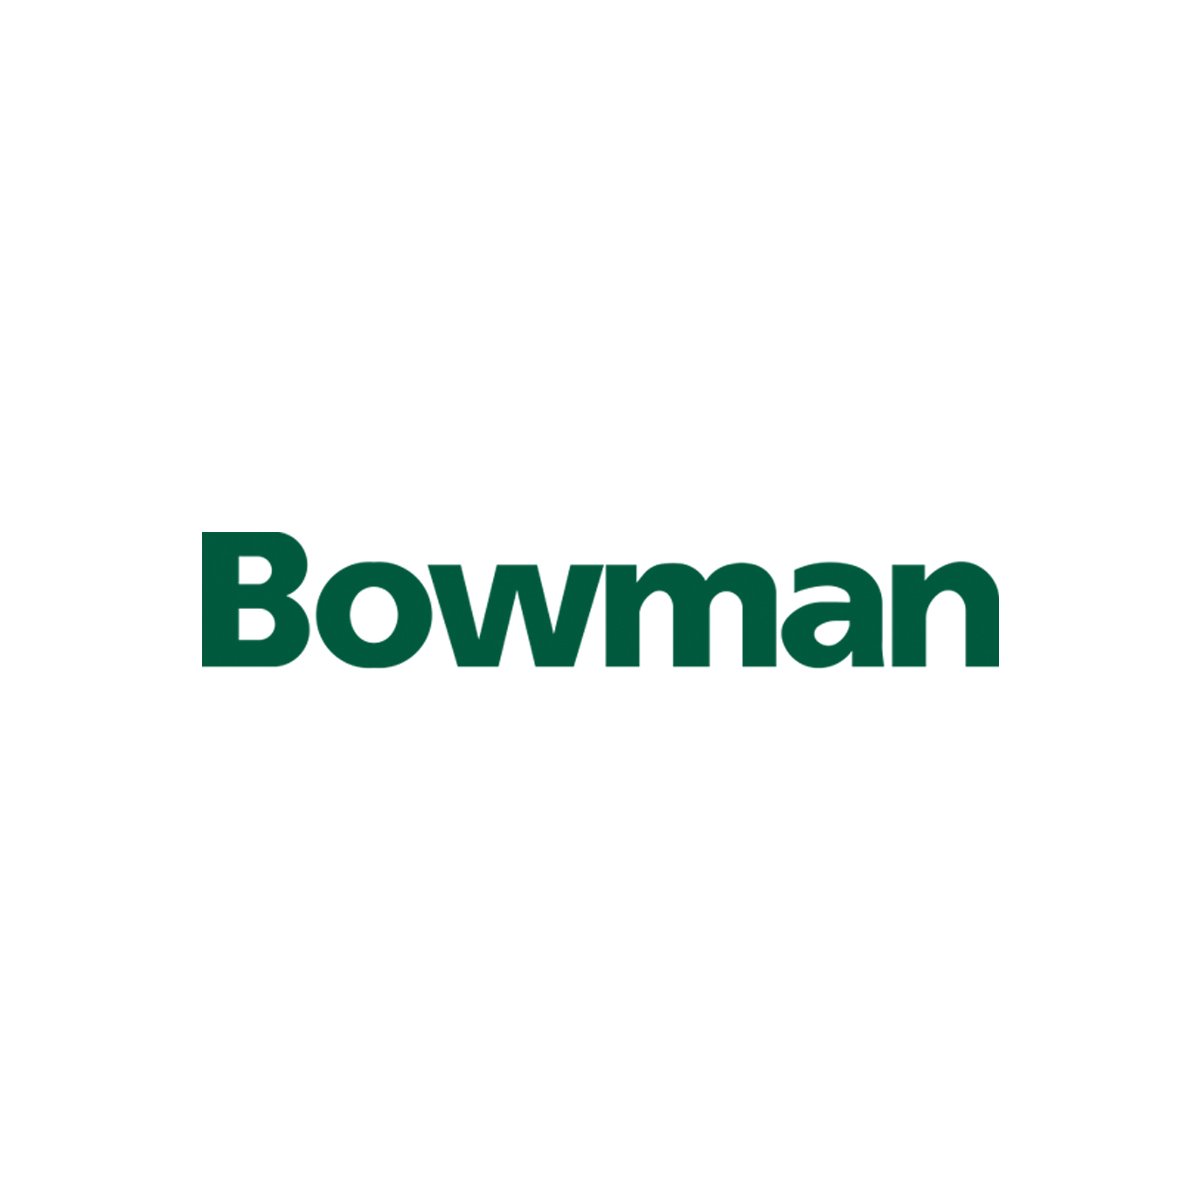 Bowman logo.jpg